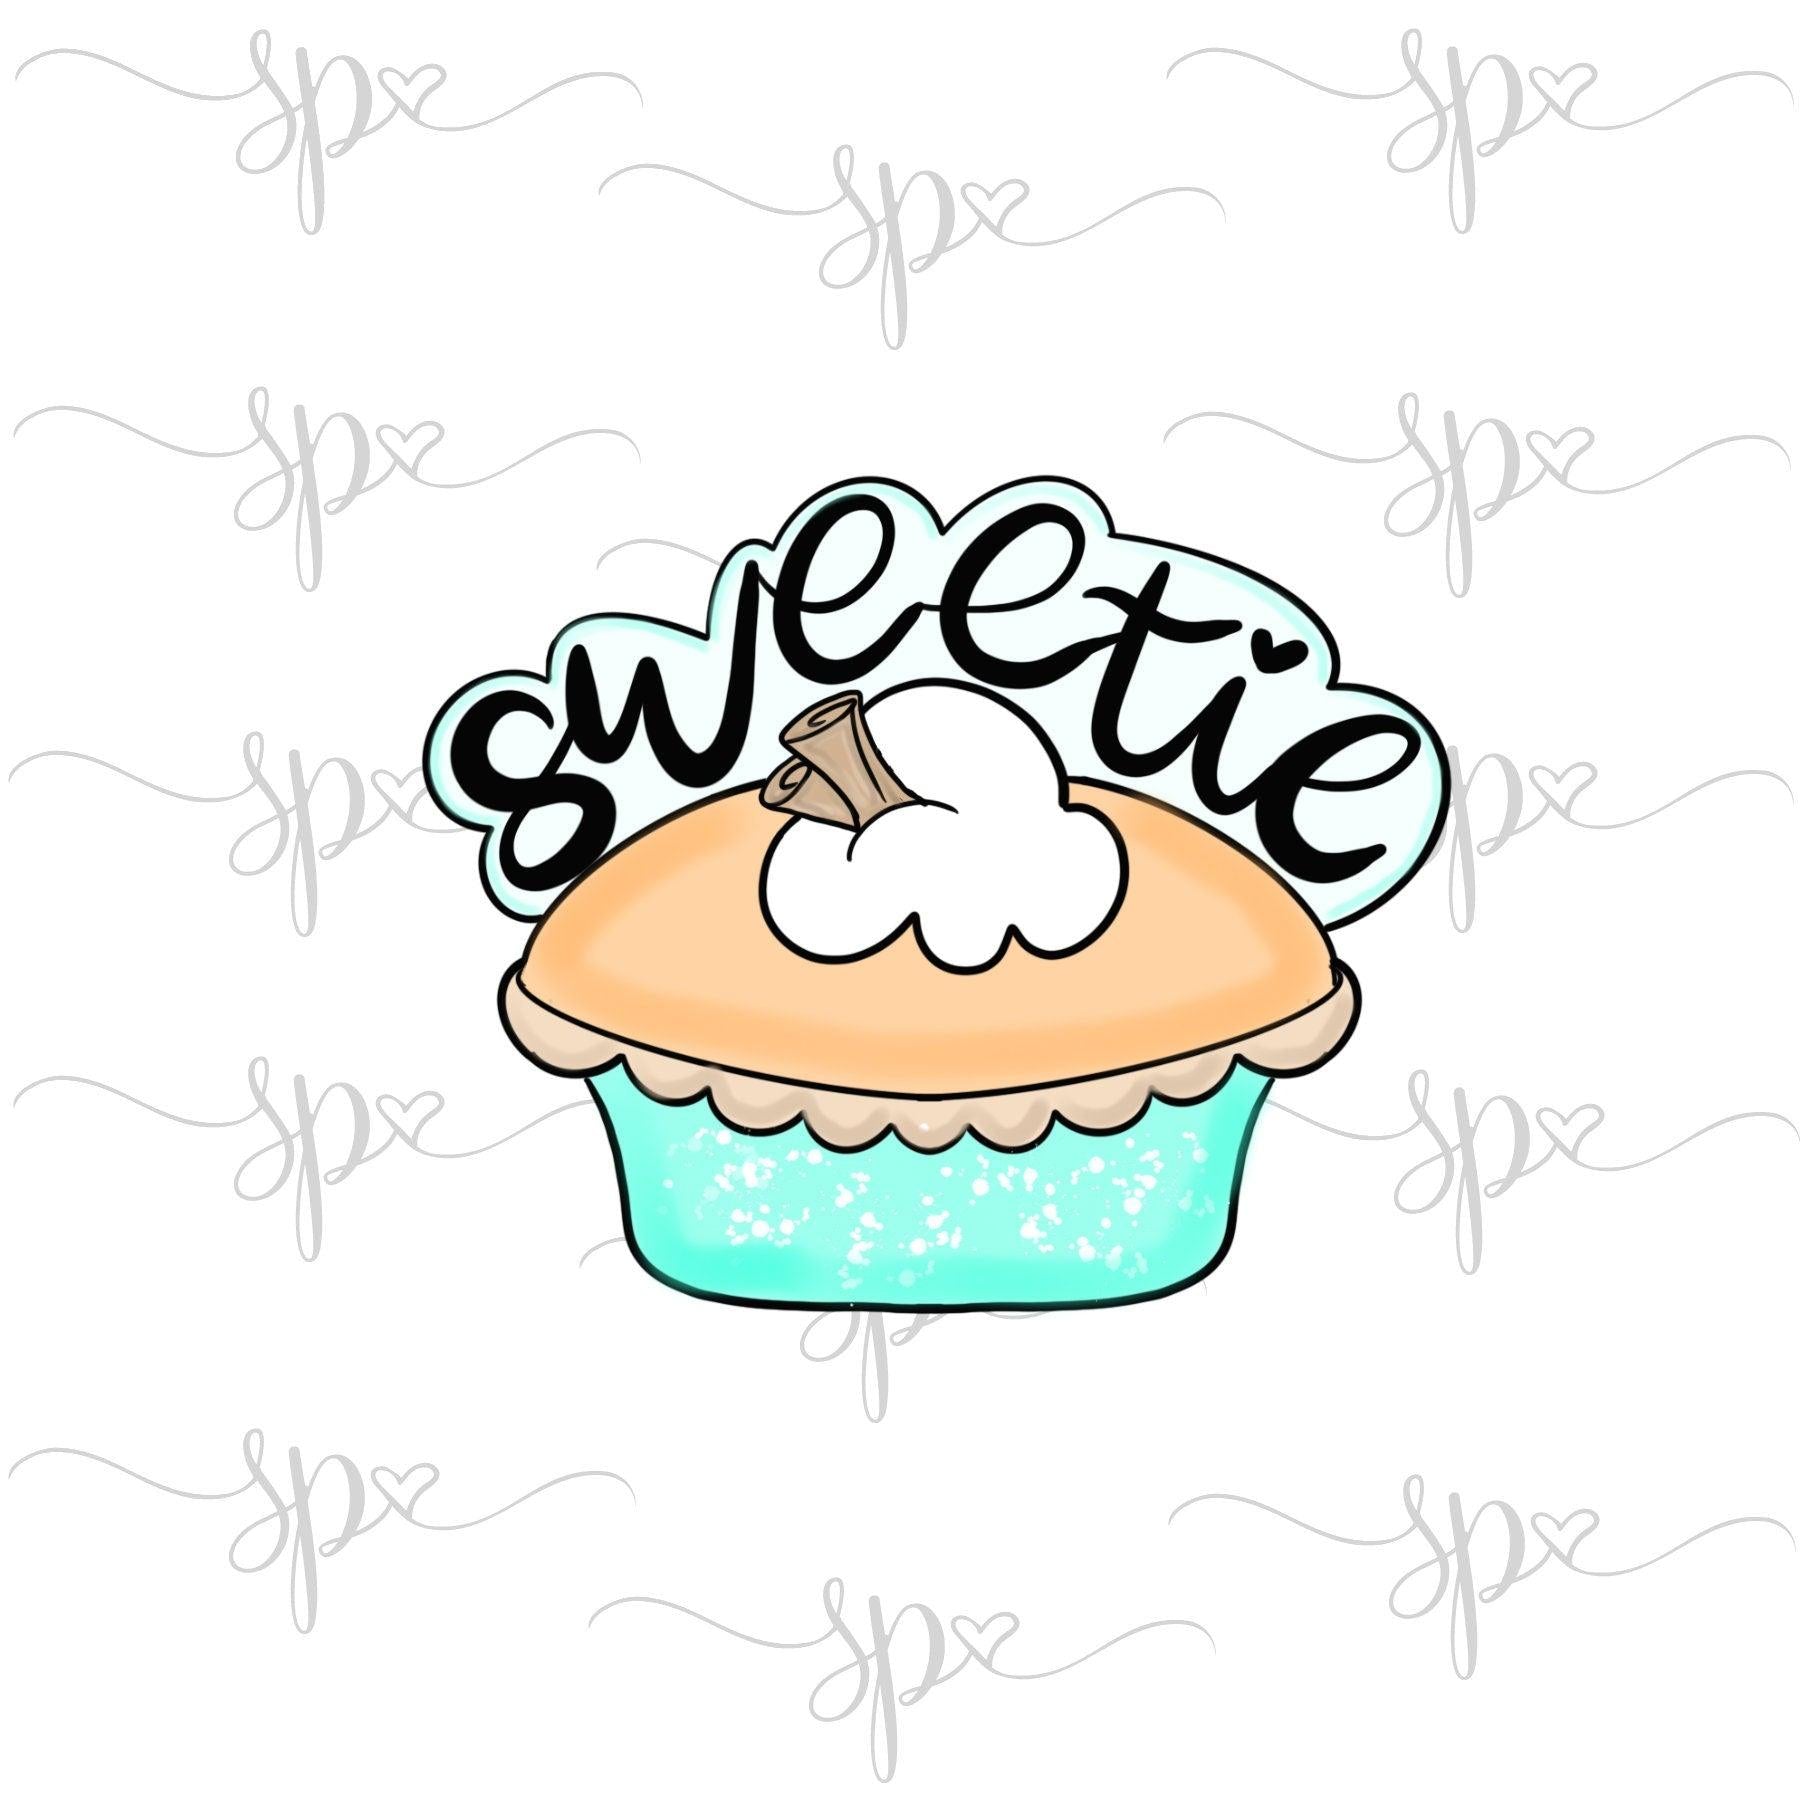 Sweetie Pie Cookie Cutter - Sweetleigh 